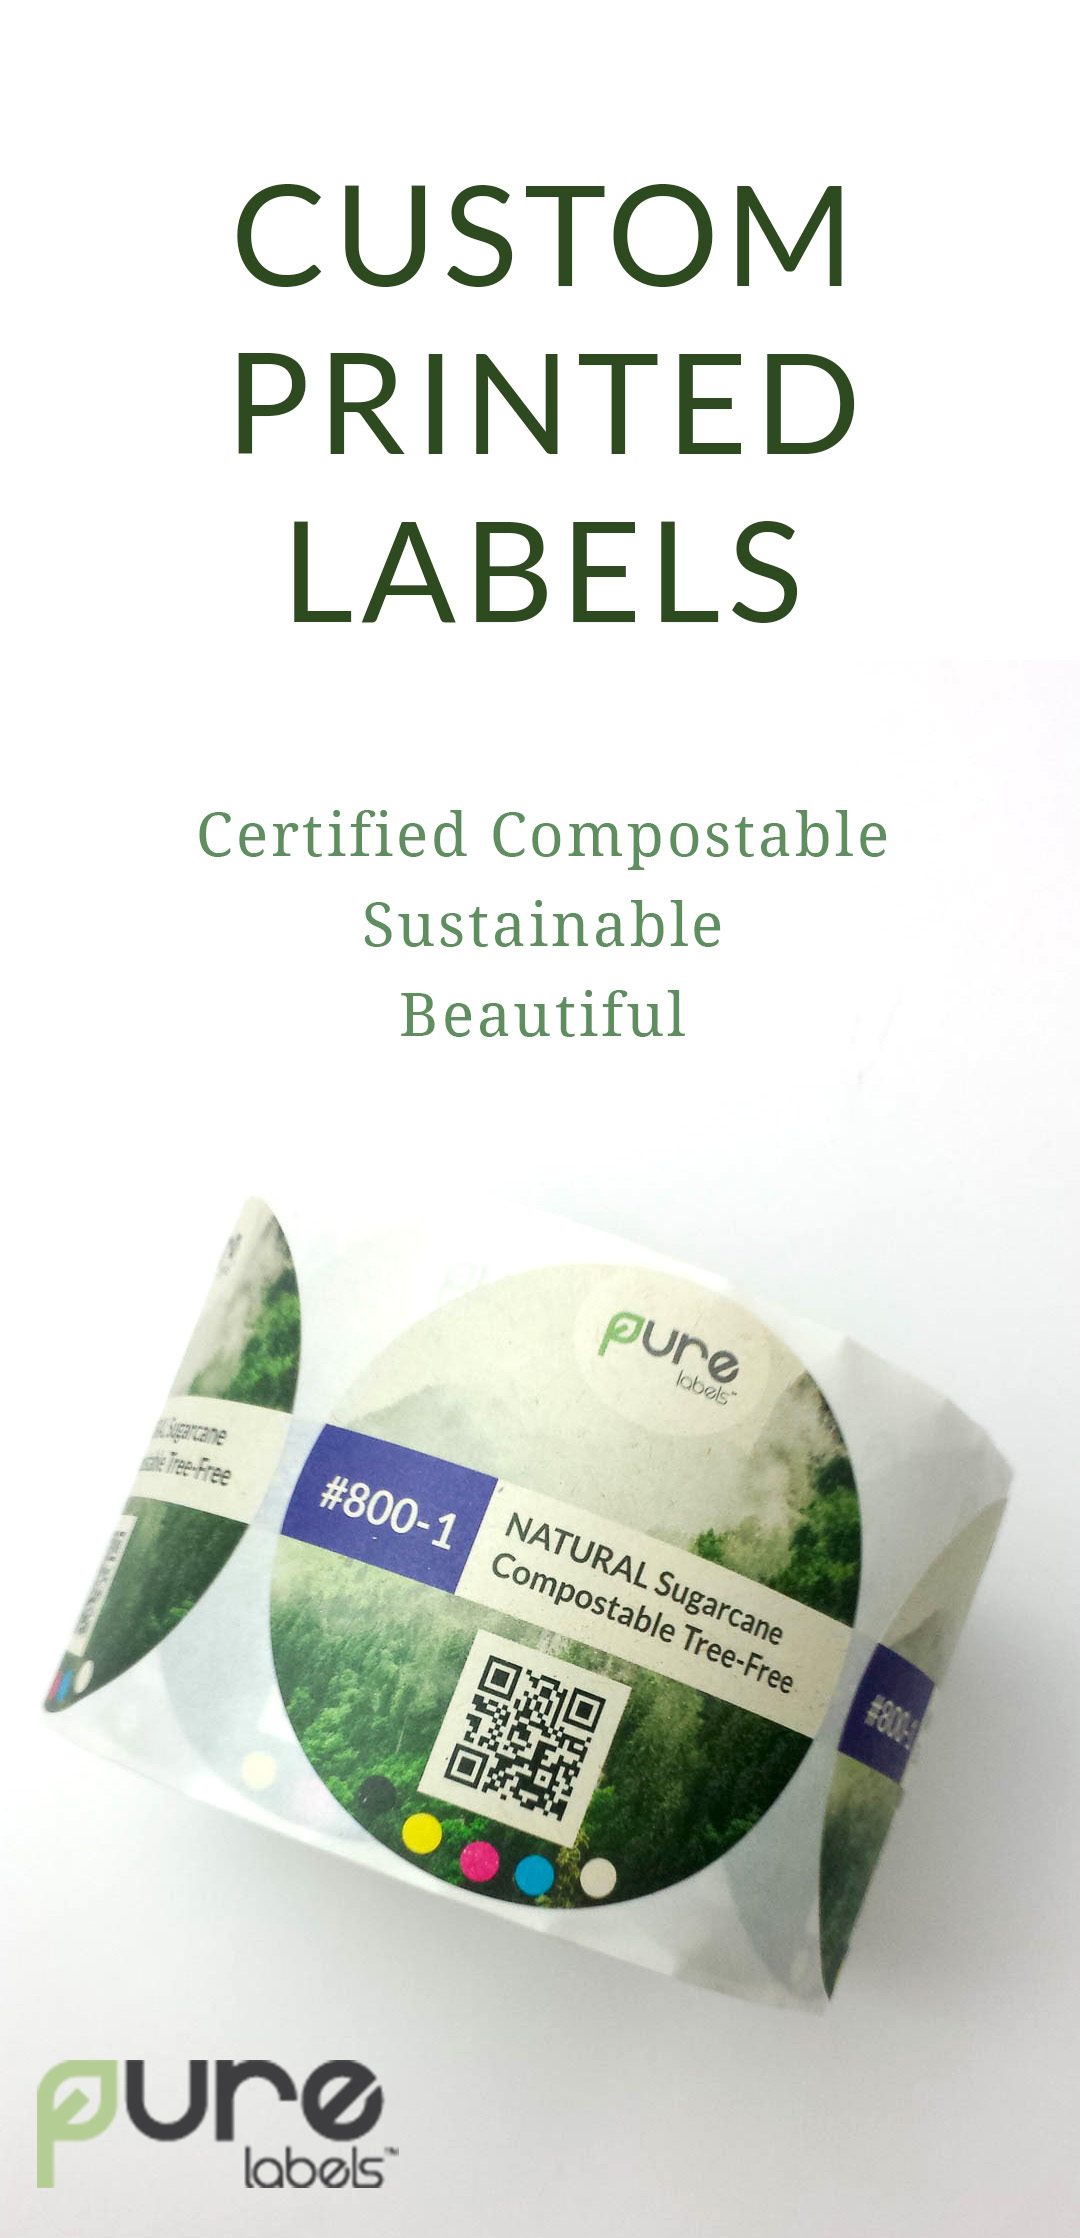 PURE Labels custom printed labels